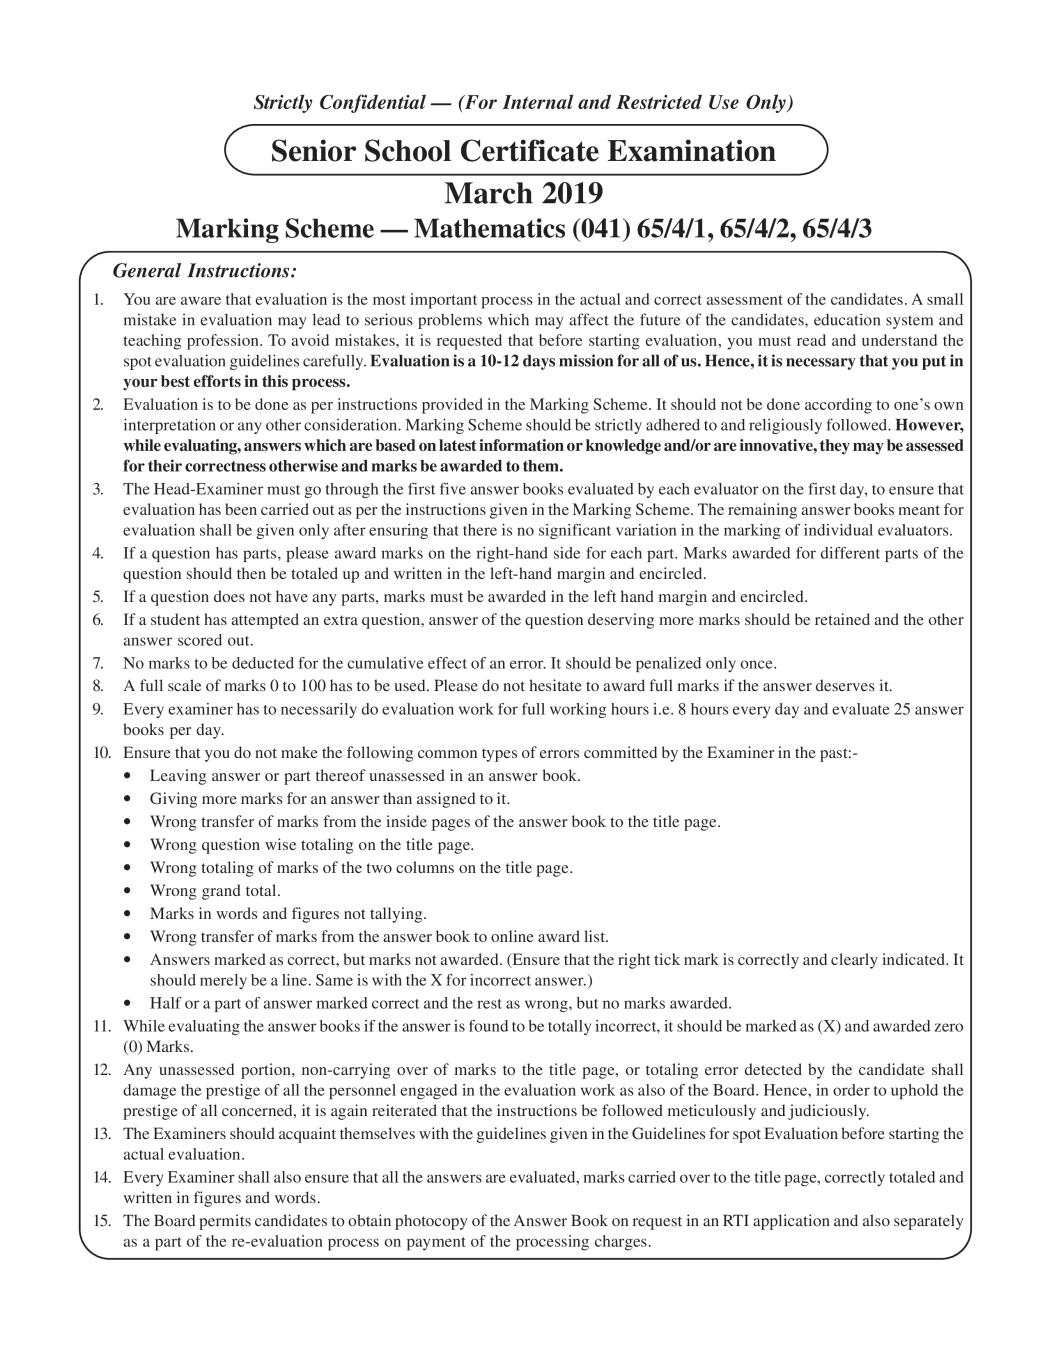 CBSE Class 12 Mathematics Question Paper 2019 Set 4 Solutions - Page 1